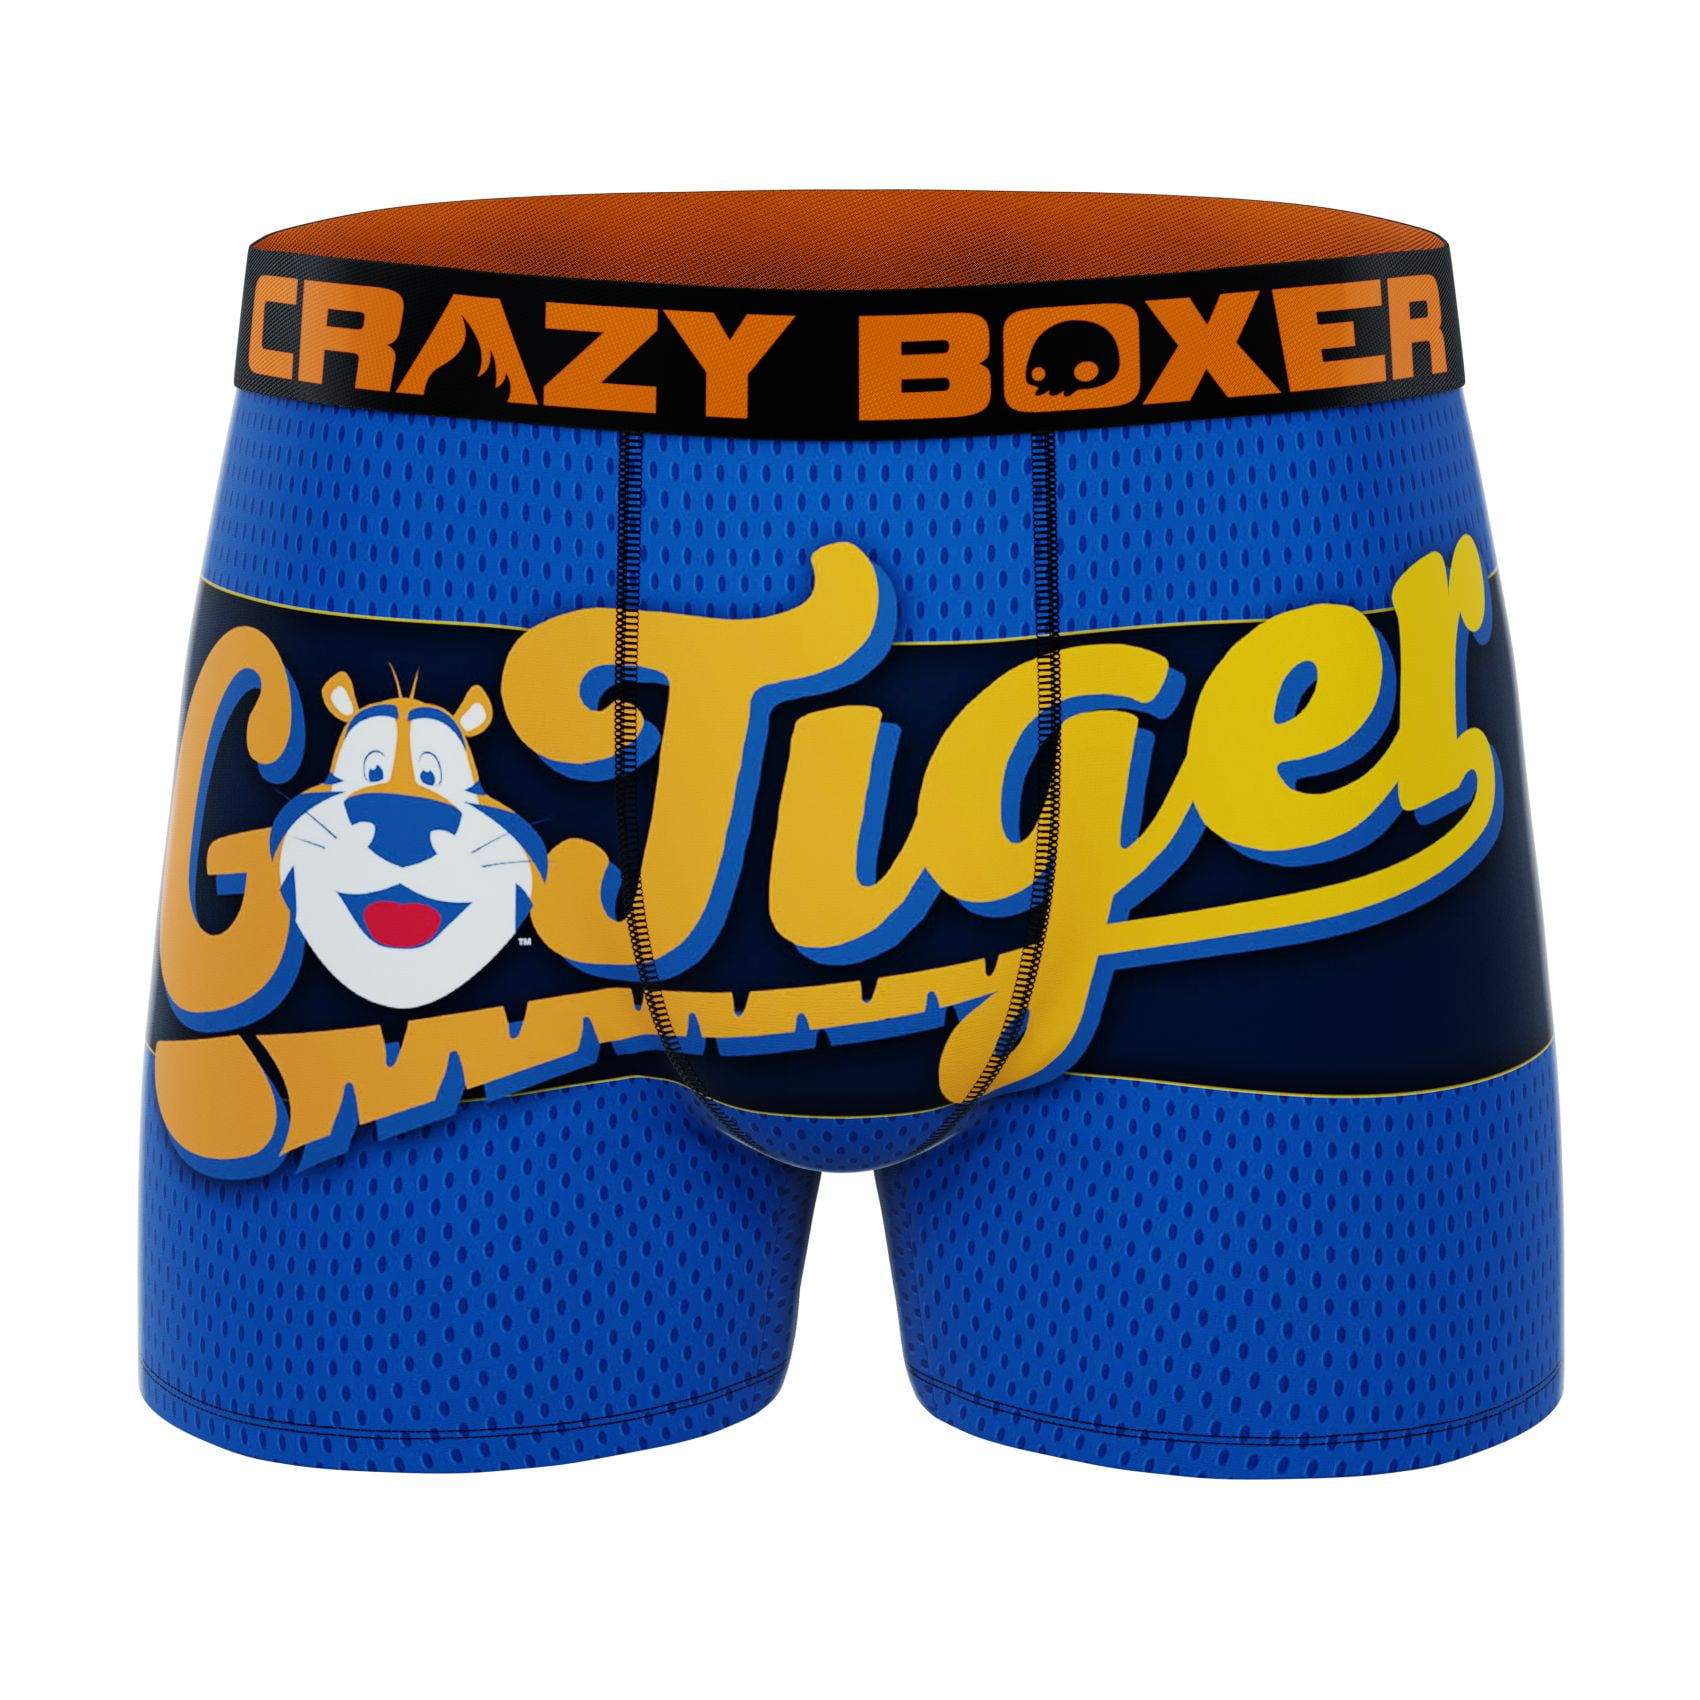 CRAZYBOXER Men's Underwear Kelloggs Perfect fit Stretch Boxer